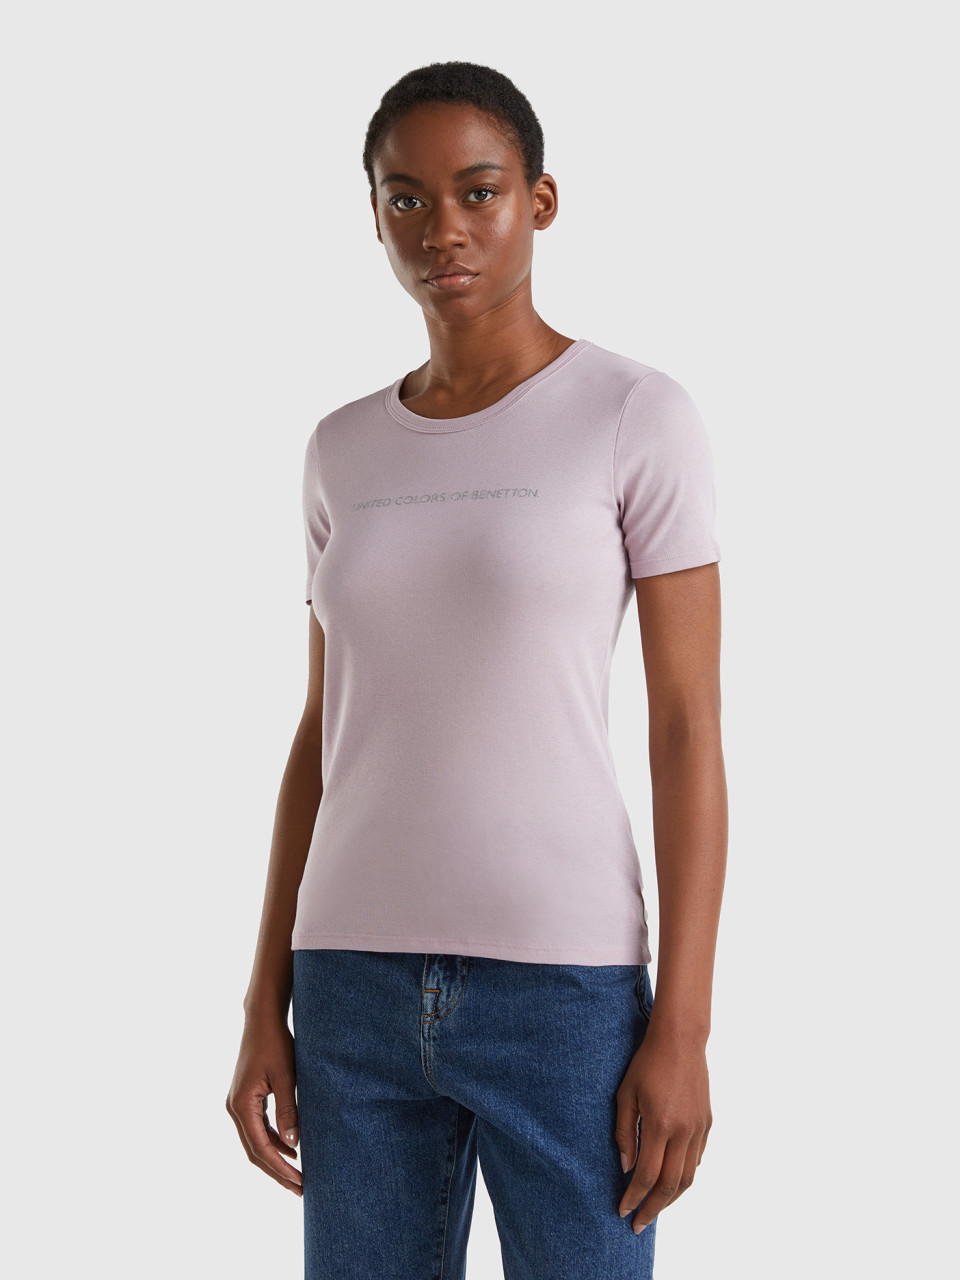 Benetton, T-shirt In 100% Cotton With Glitter Print Logo, Lilac, Women